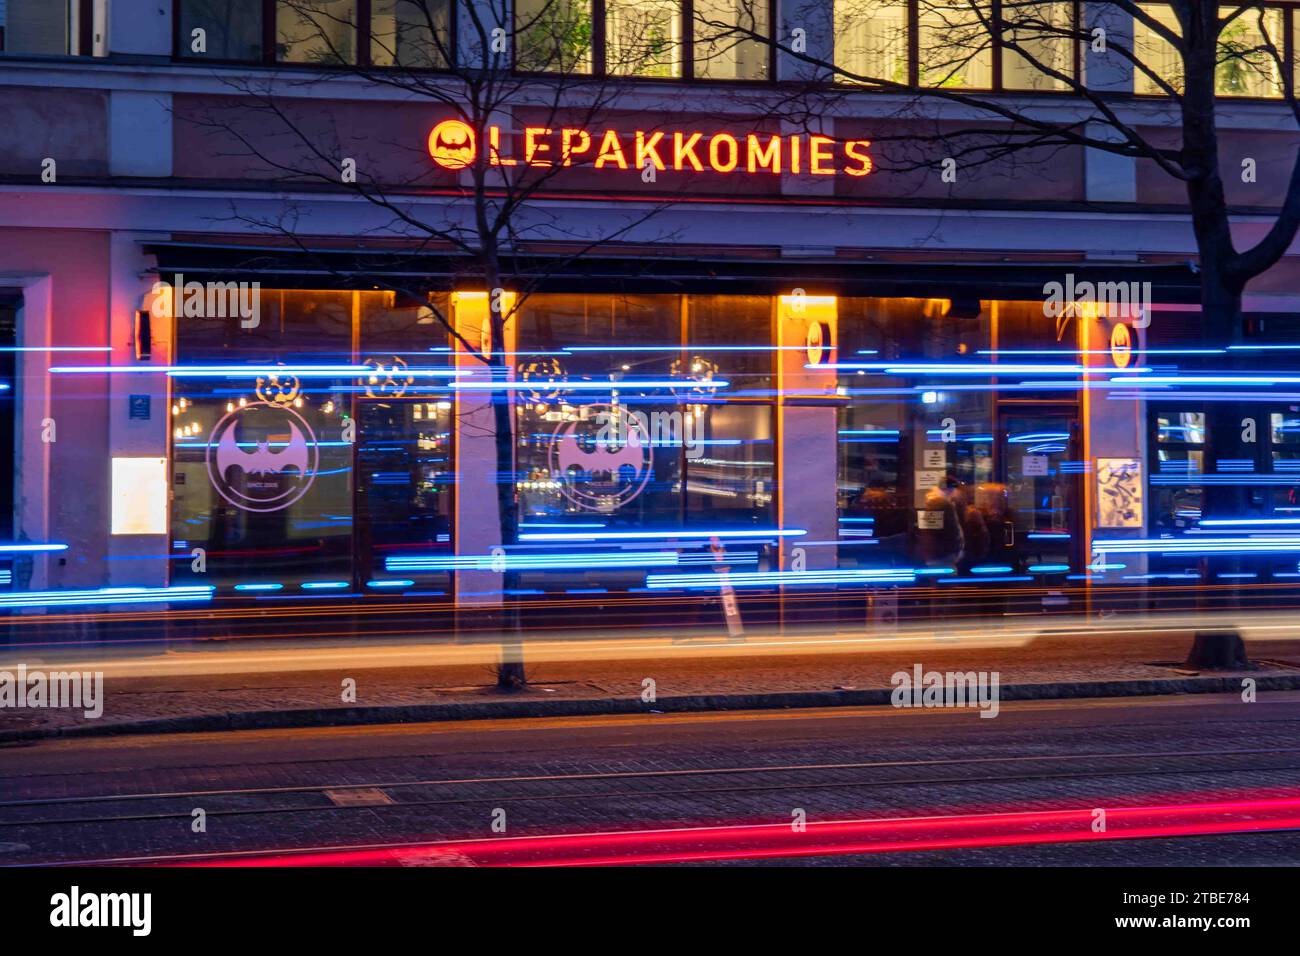 Lepakkomies dive bar and music venue after dark with emergency vehicle light streaks in Harju district of Helsinki, Finland Stock Photo